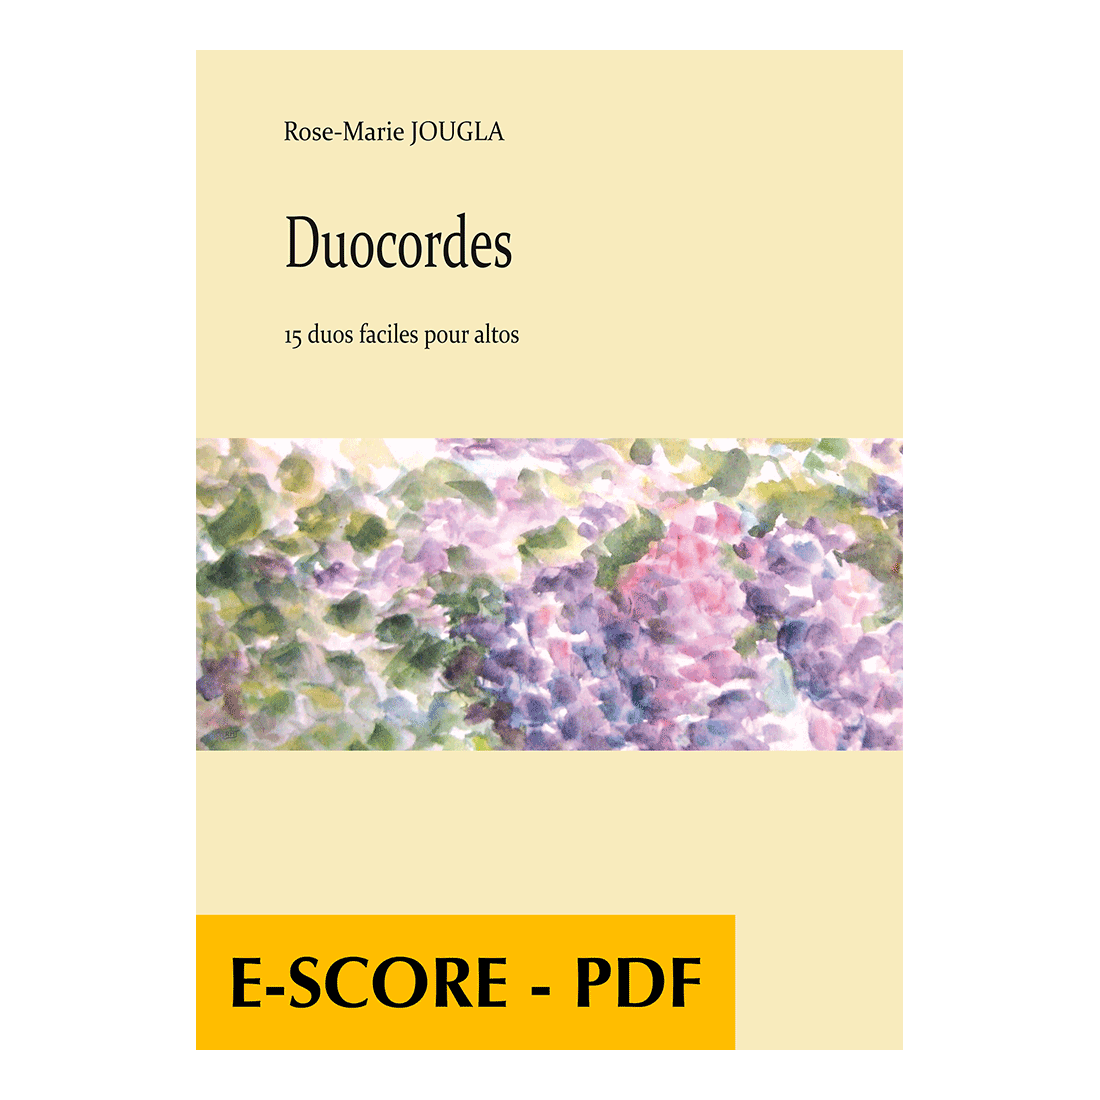 Duocordes - 15 duos faciles pour altos - E-score PDF